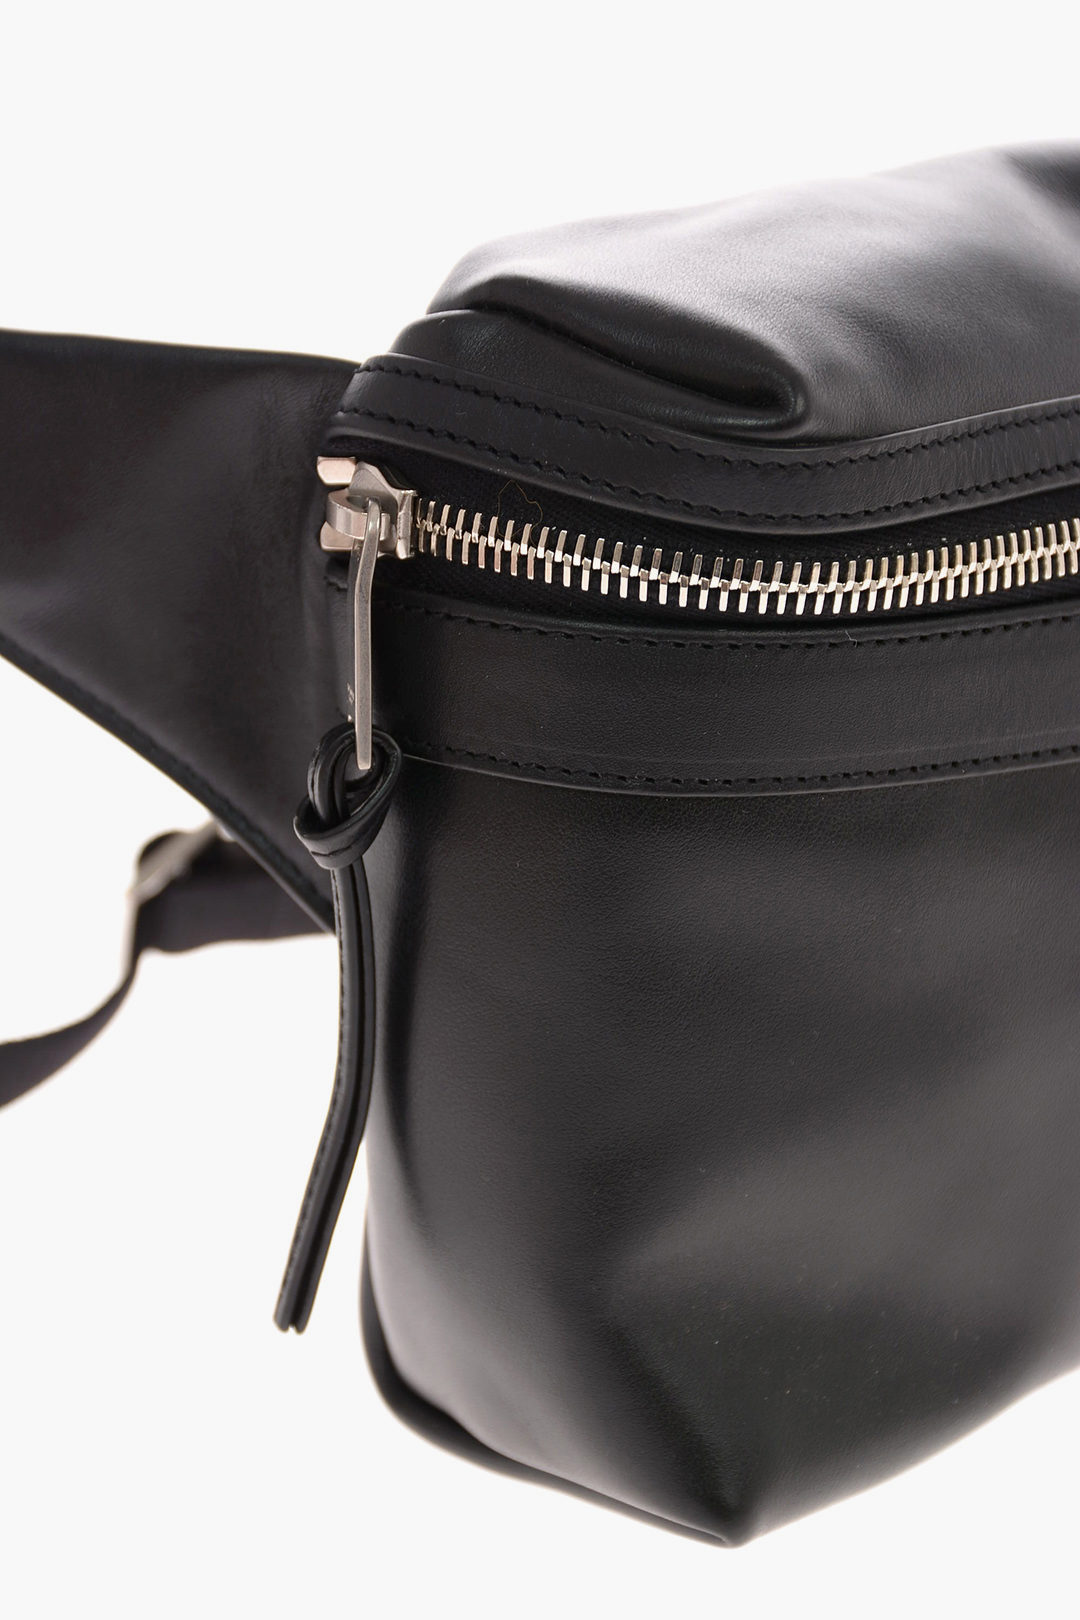 Saint Laurent Leather Bum Bag men - Glamood Outlet